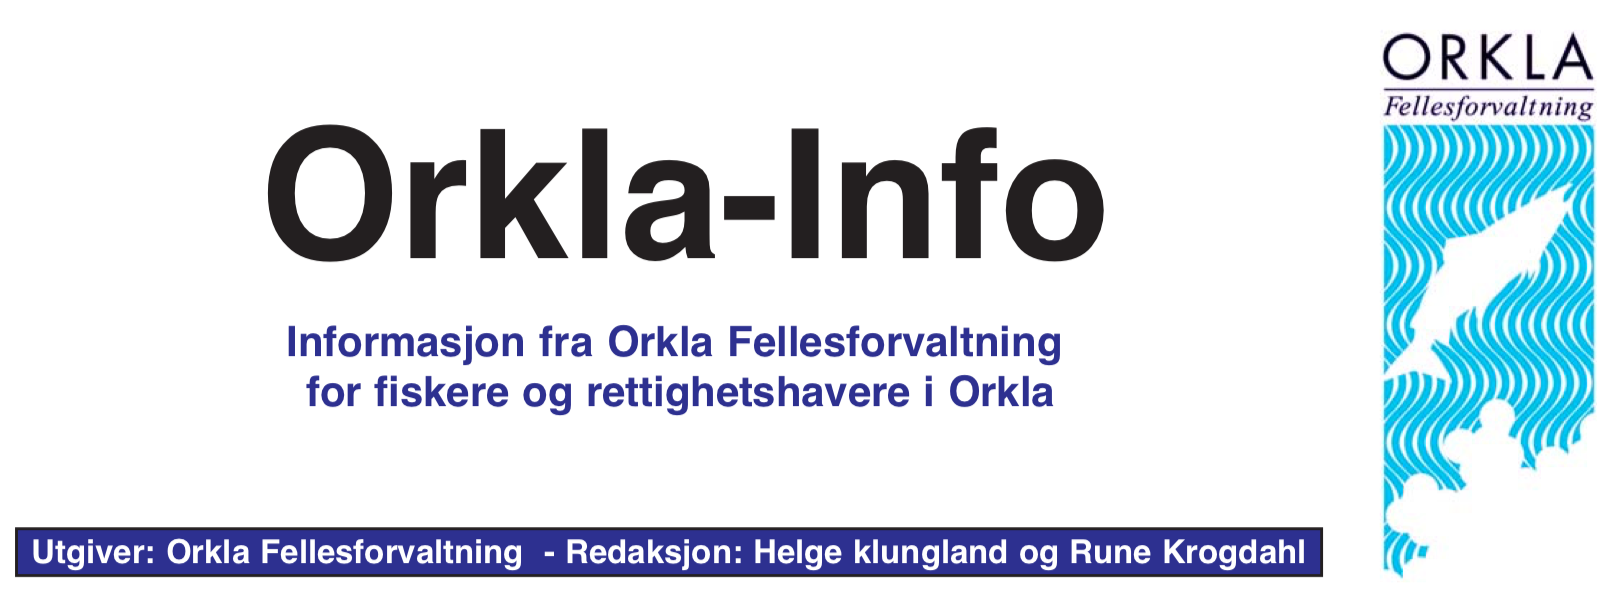 Orkla-info